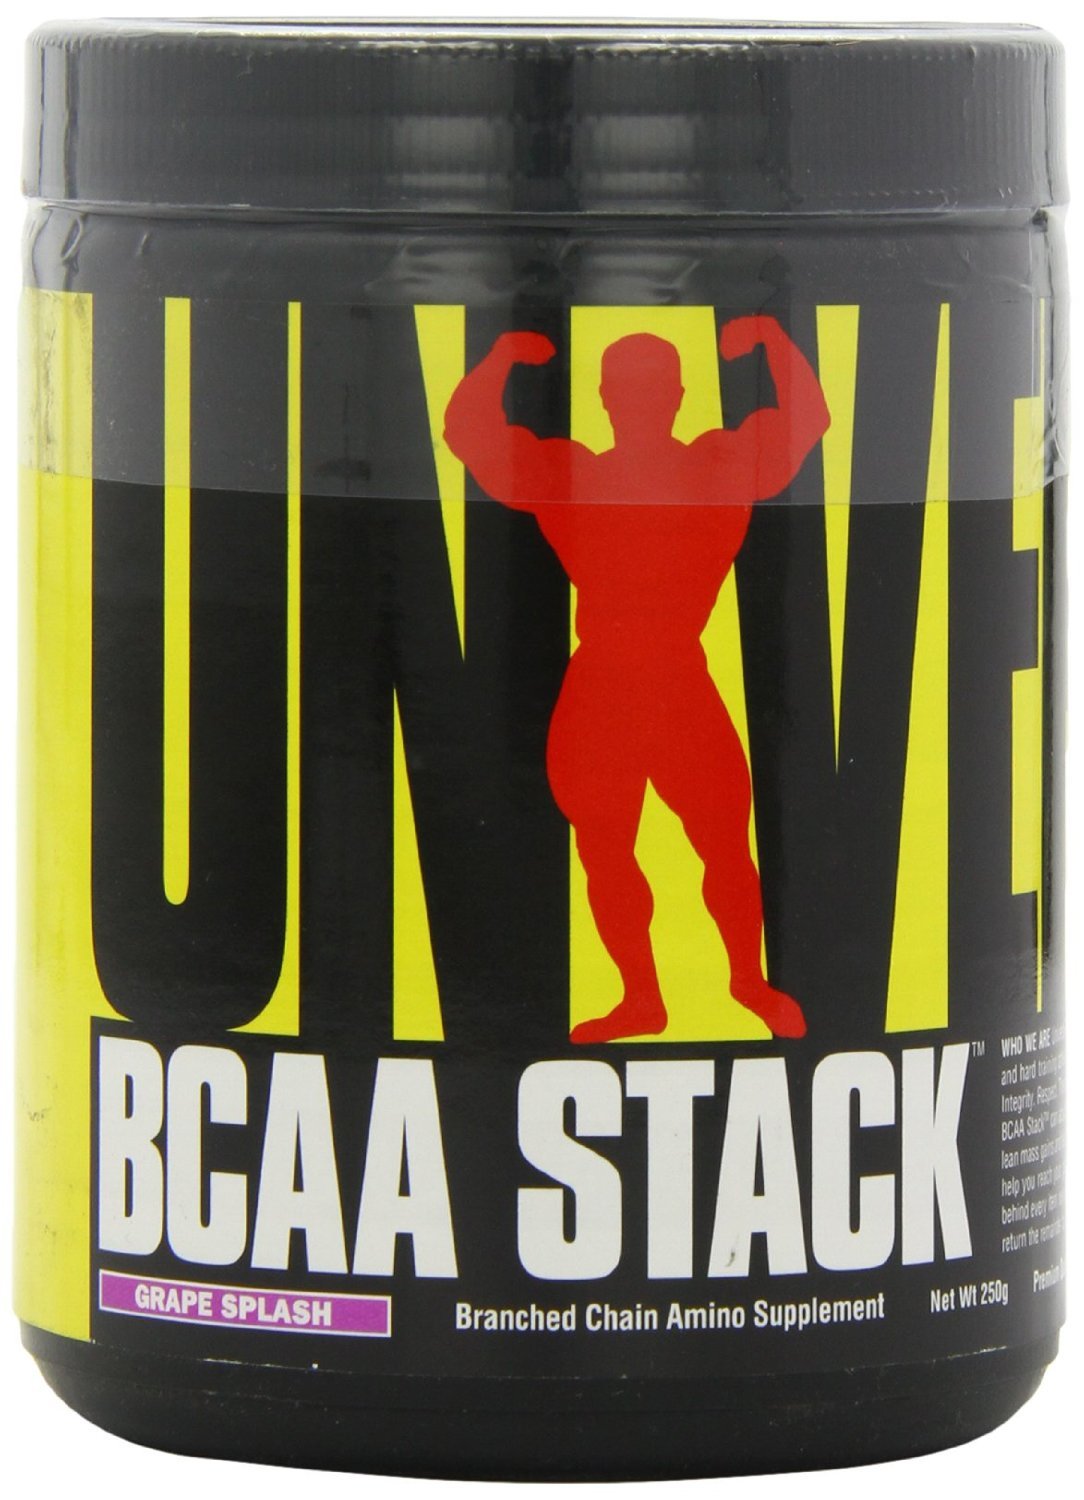 BCAA Stack, 250 g, Universal Nutrition. BCAA. Weight Loss स्वास्थ्य लाभ Anti-catabolic properties Lean muscle mass 